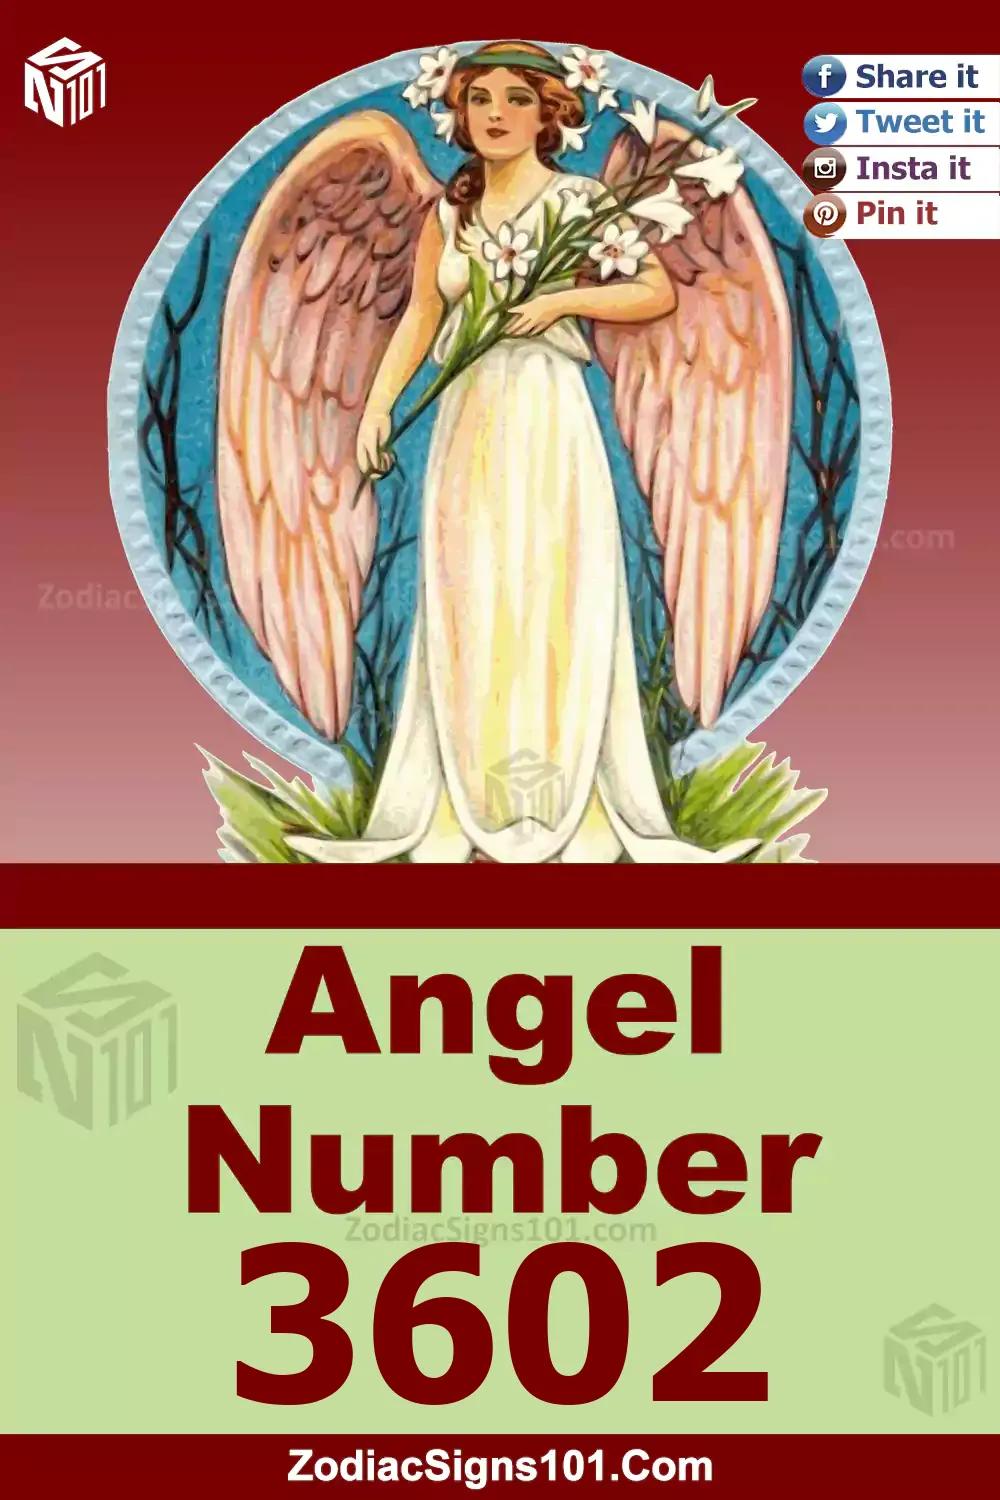 3602-Angel-Number-Meaning.jpg